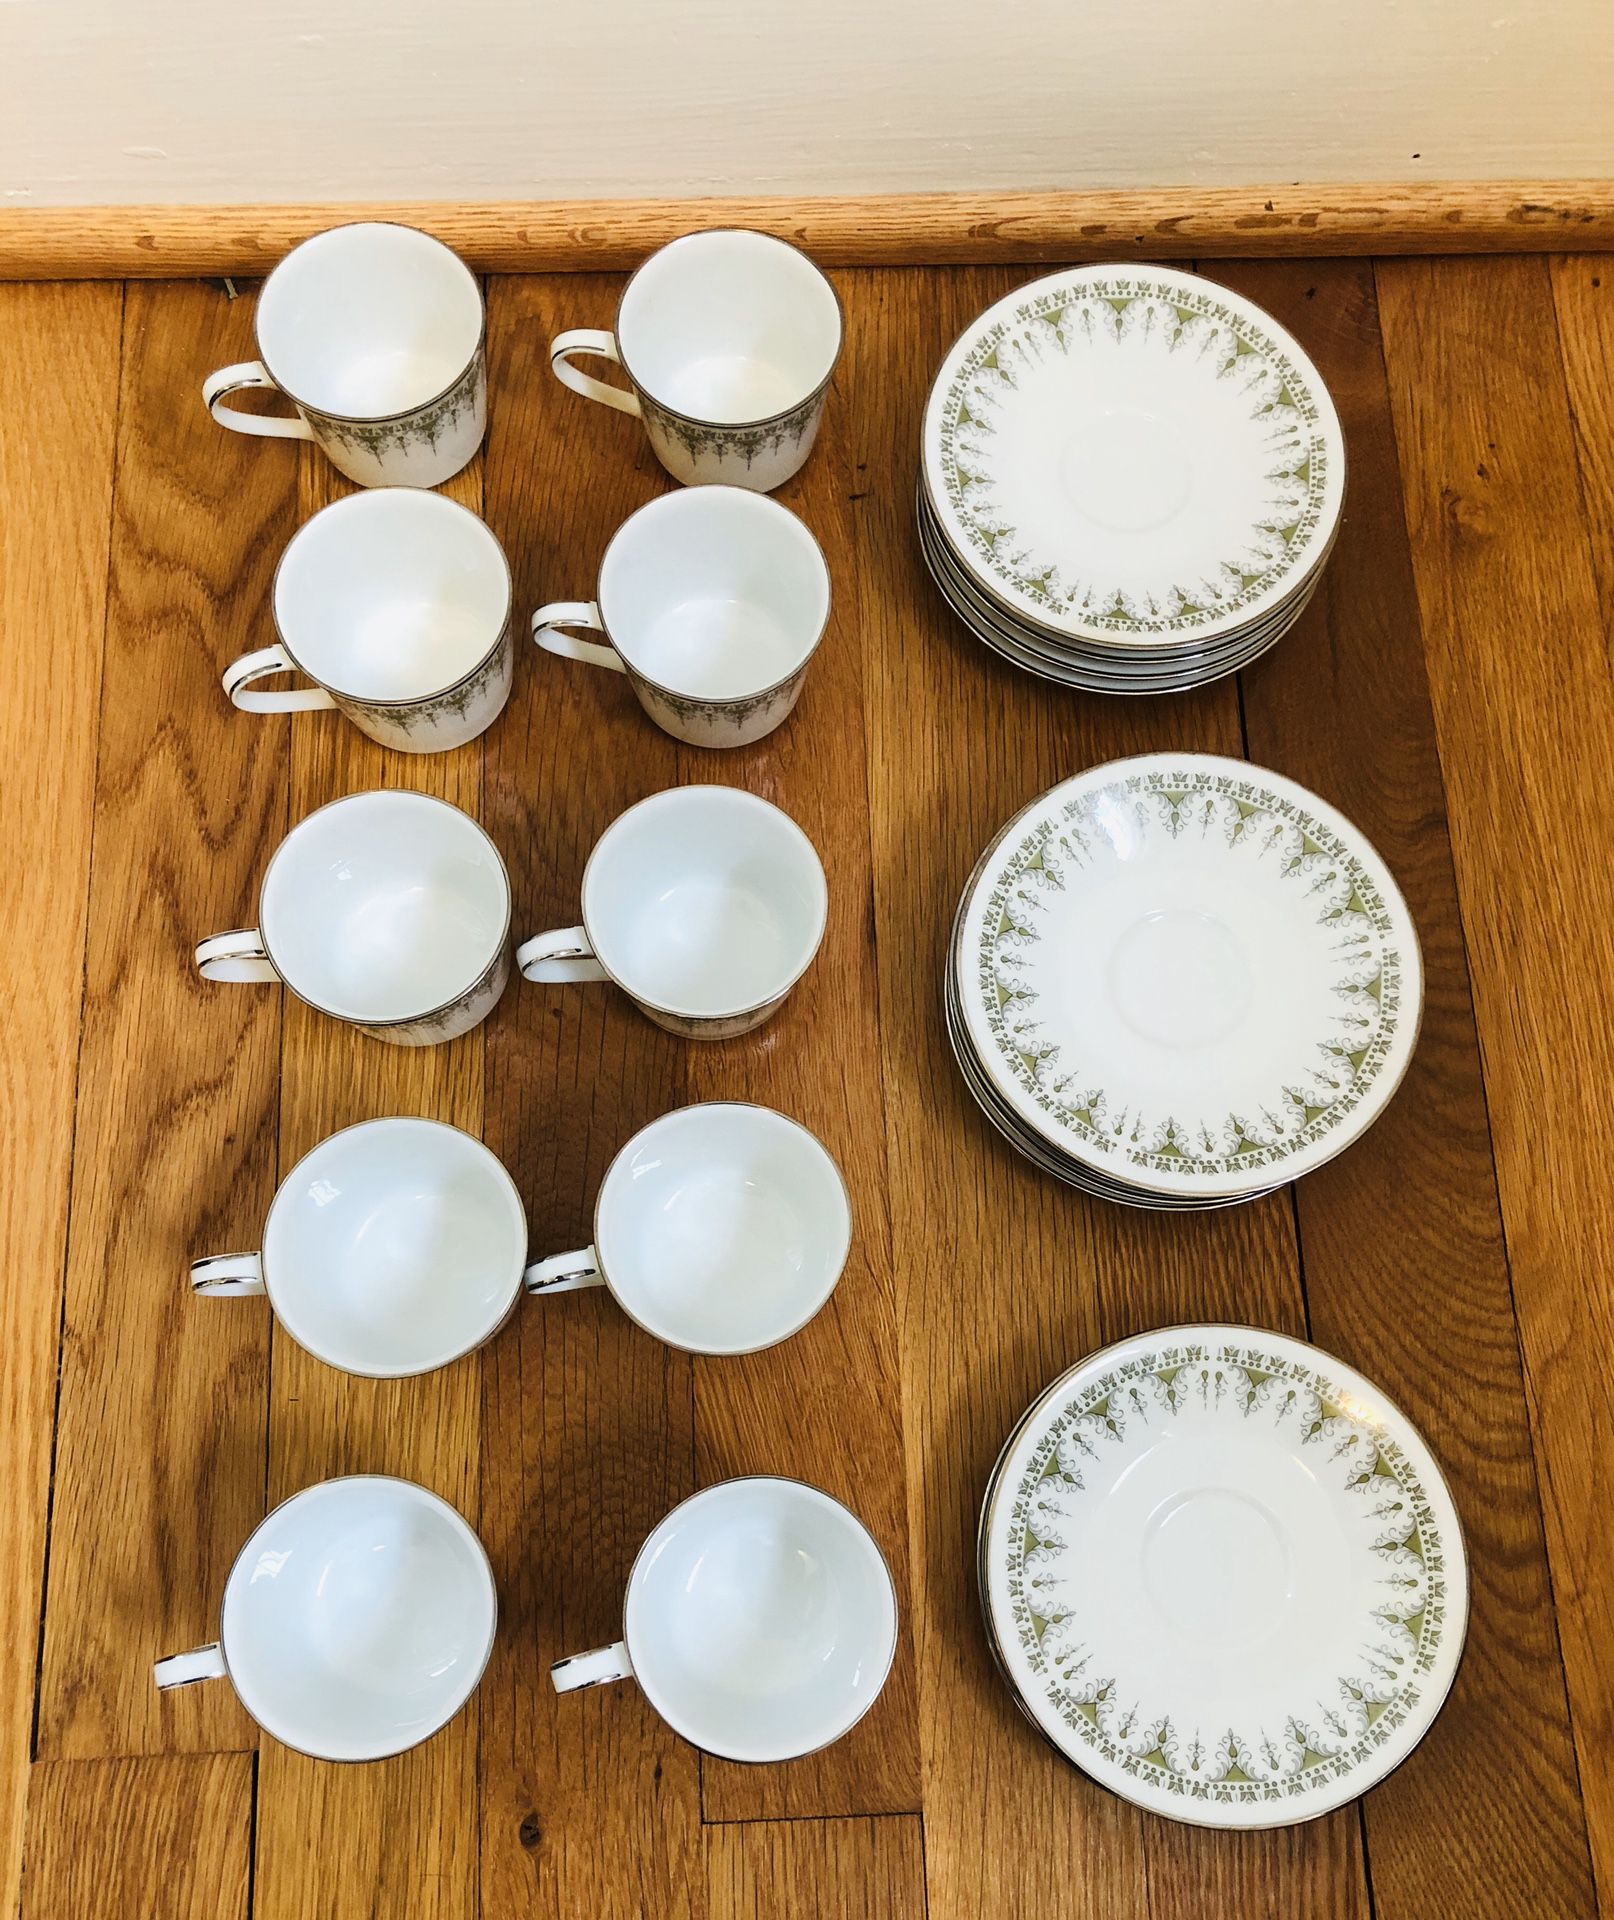 Noritake Kambrook China Tea Set - Set of 10 - Demitasse Cups and Saucers